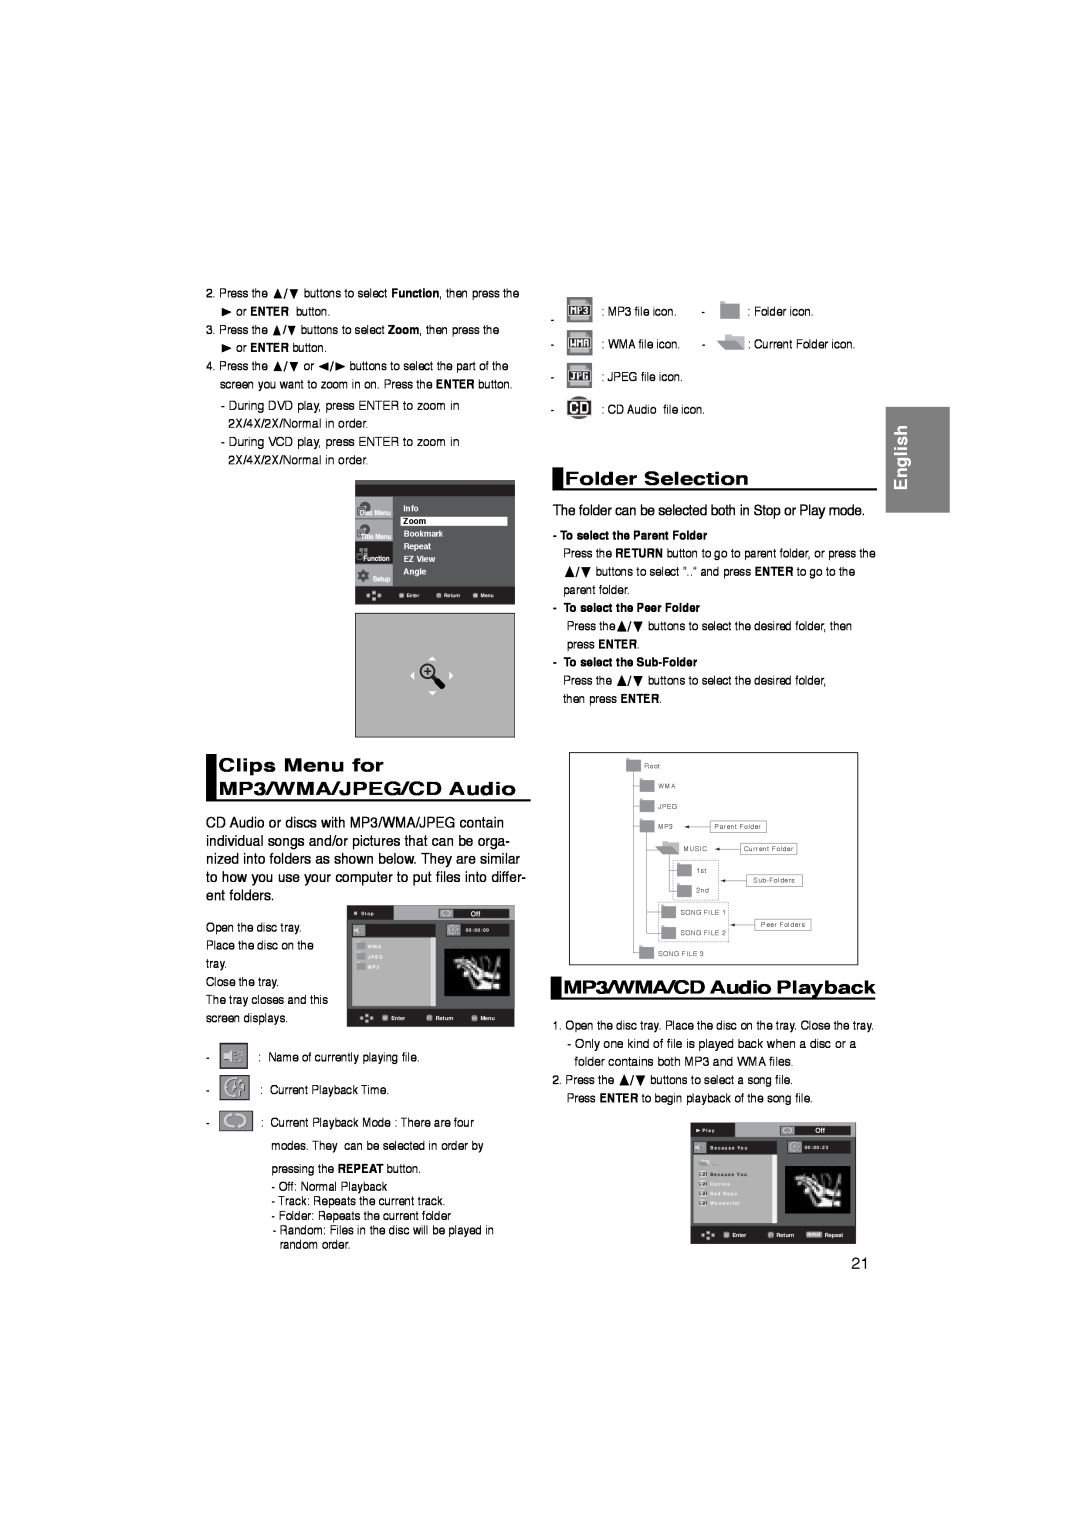 Samsung DVD-P260K/AFR manual Clips Menu for MP3/WMA/JPEG/CD Audio, Folder Selection, MP3/WMA/CD Audio Playback, English 